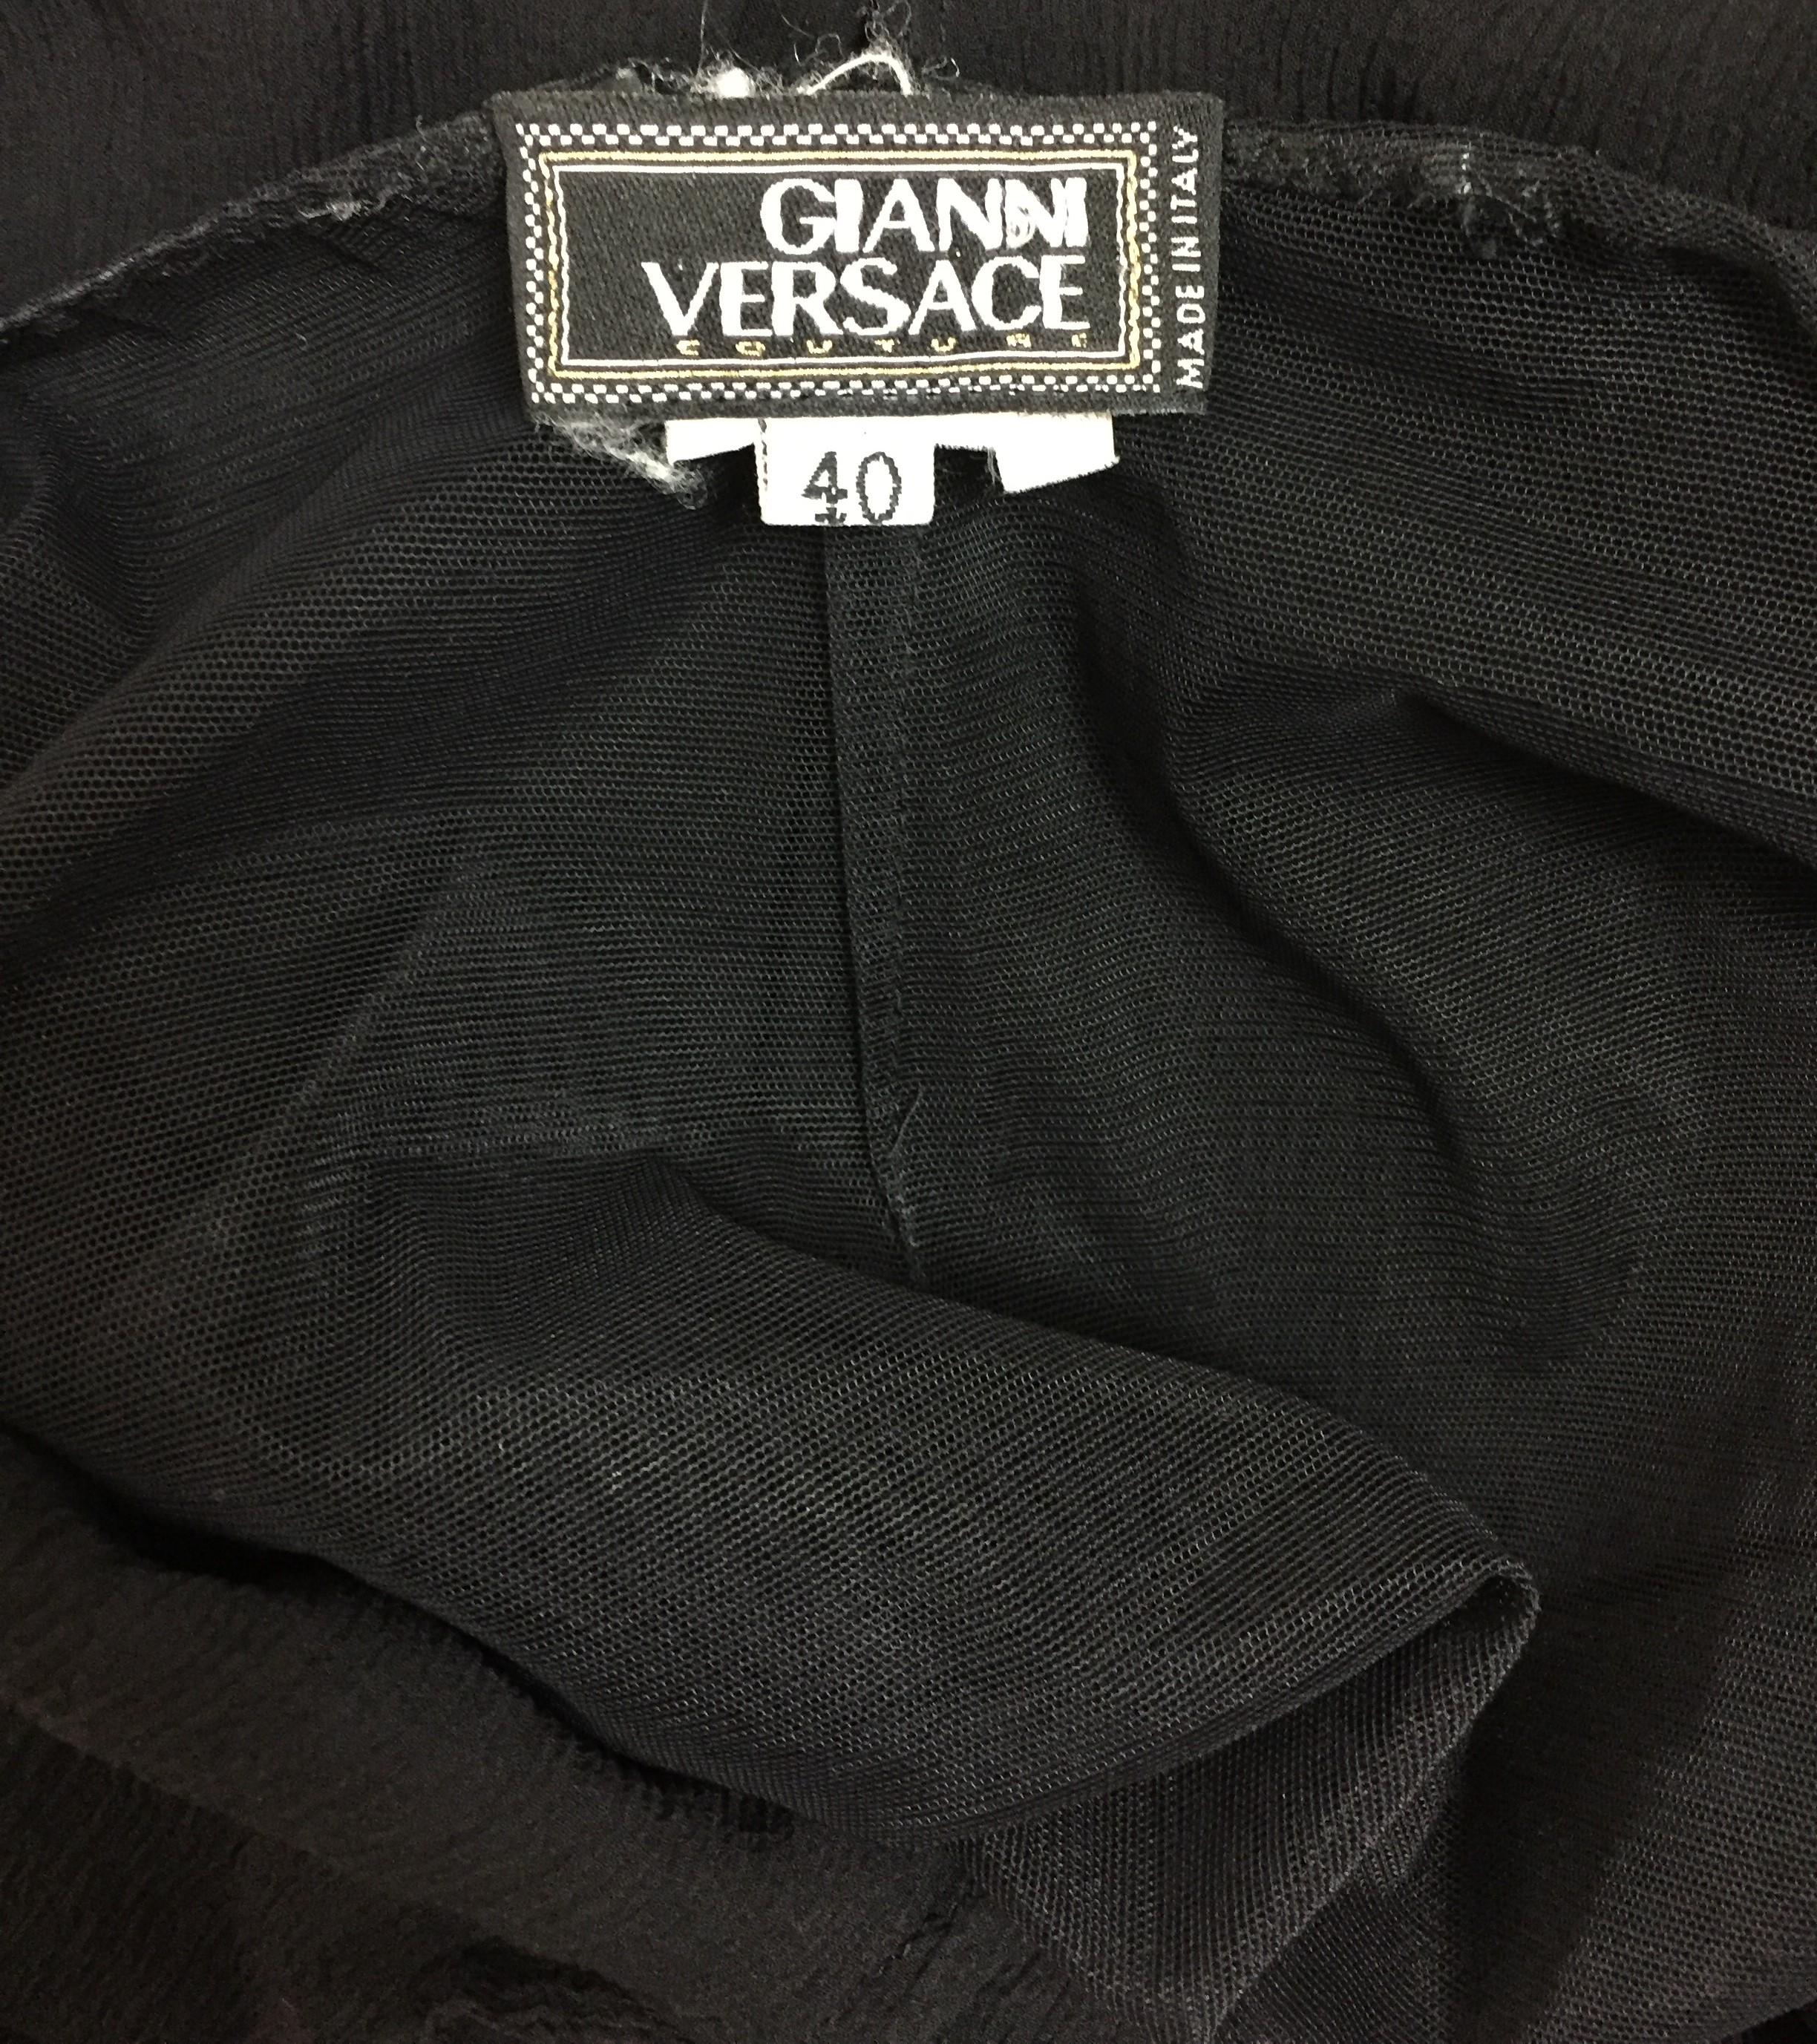 C. 2000 Gianni Versace Sheer Black Silk Plunging Grecian Gown Dress 1